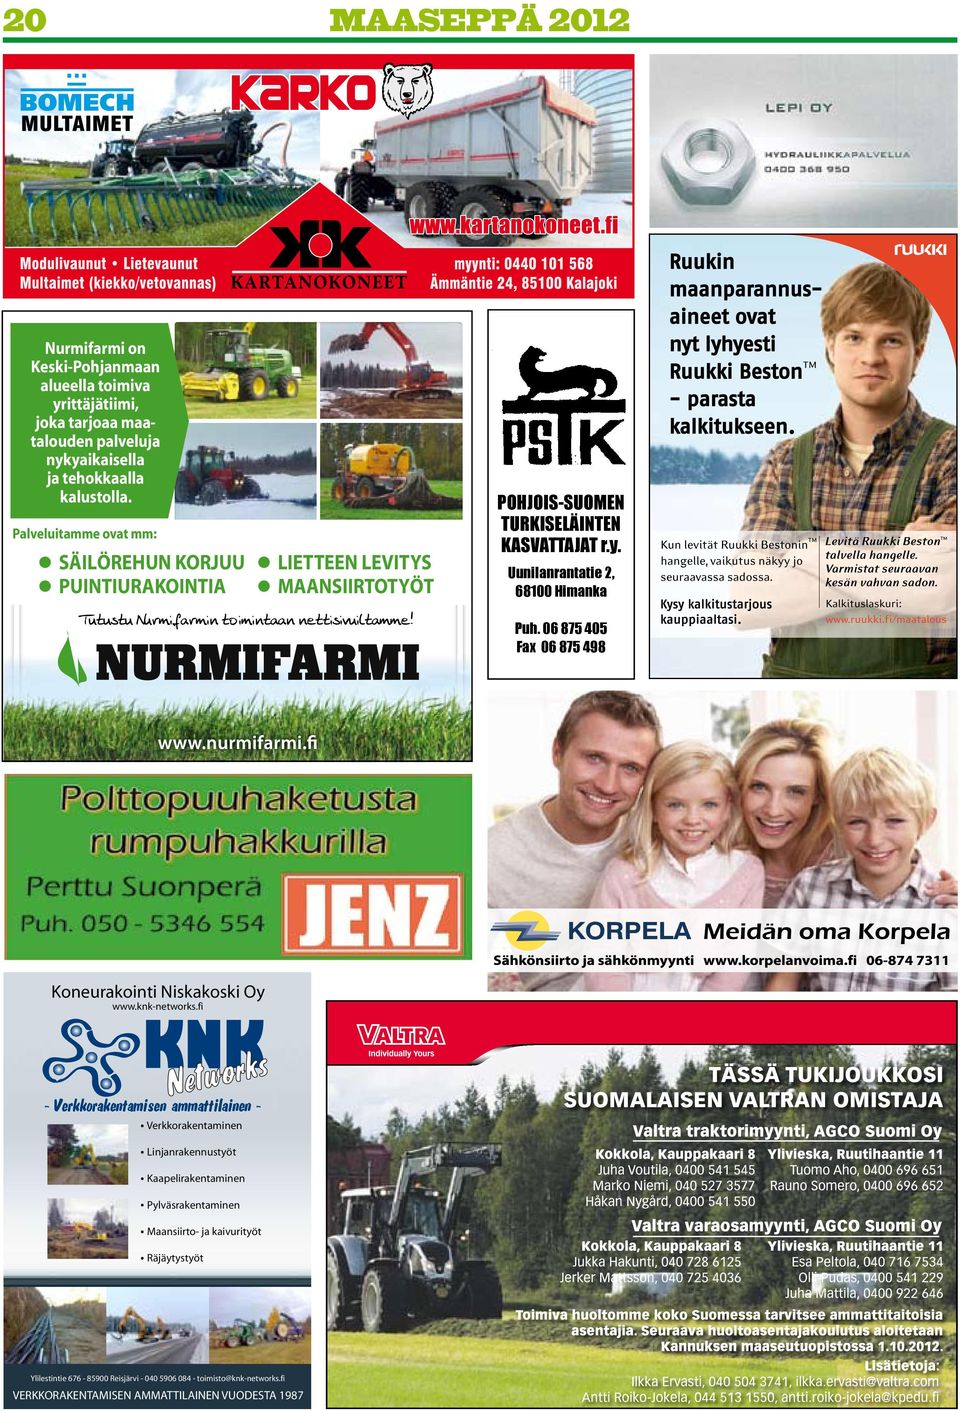 Uunilanrantatie 2, 68100 Himanka Puh. 06 875 405 Fax 06 875 498 Koneurakointi Niskakoski Oy www.knk-networks.